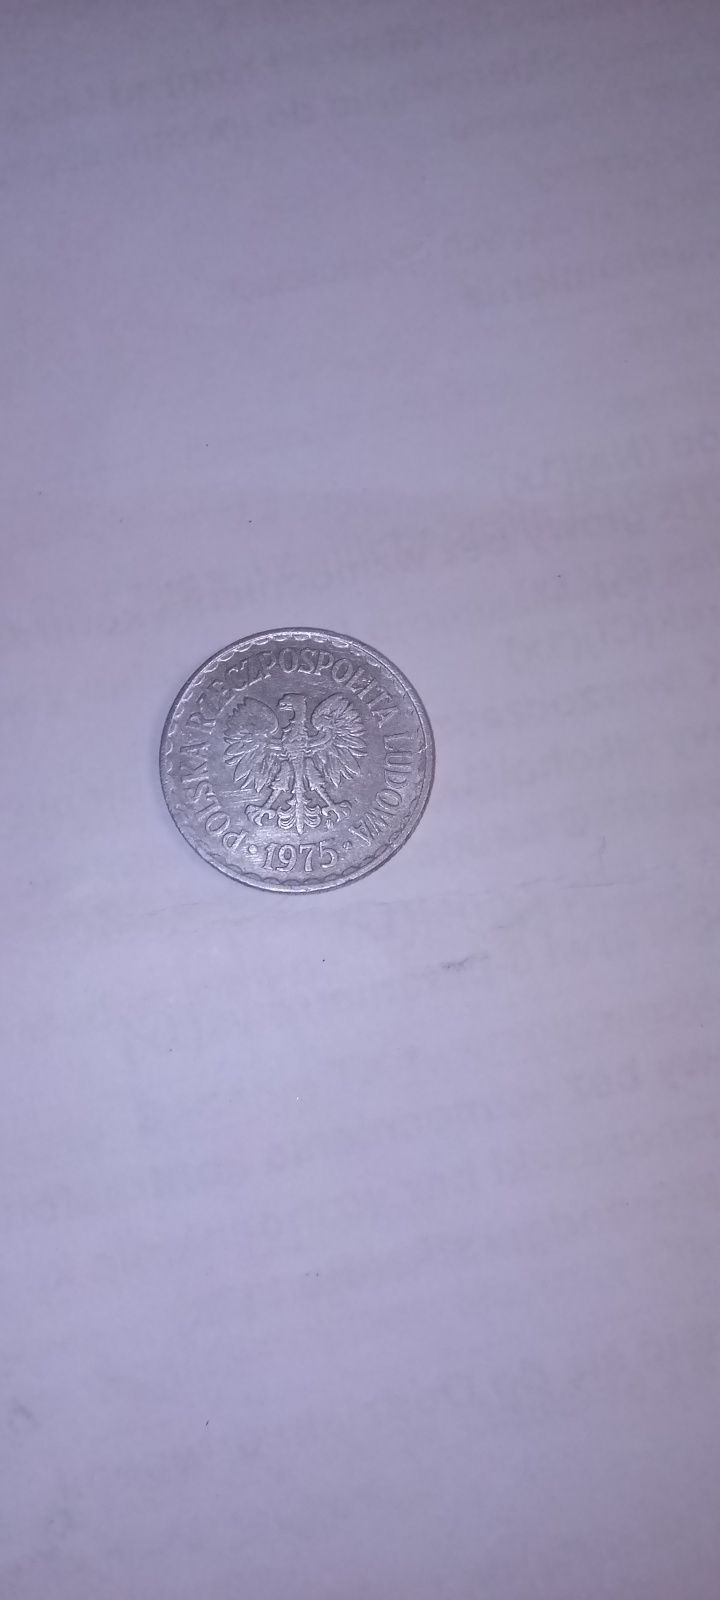 Monety  1 zł z roku 1975